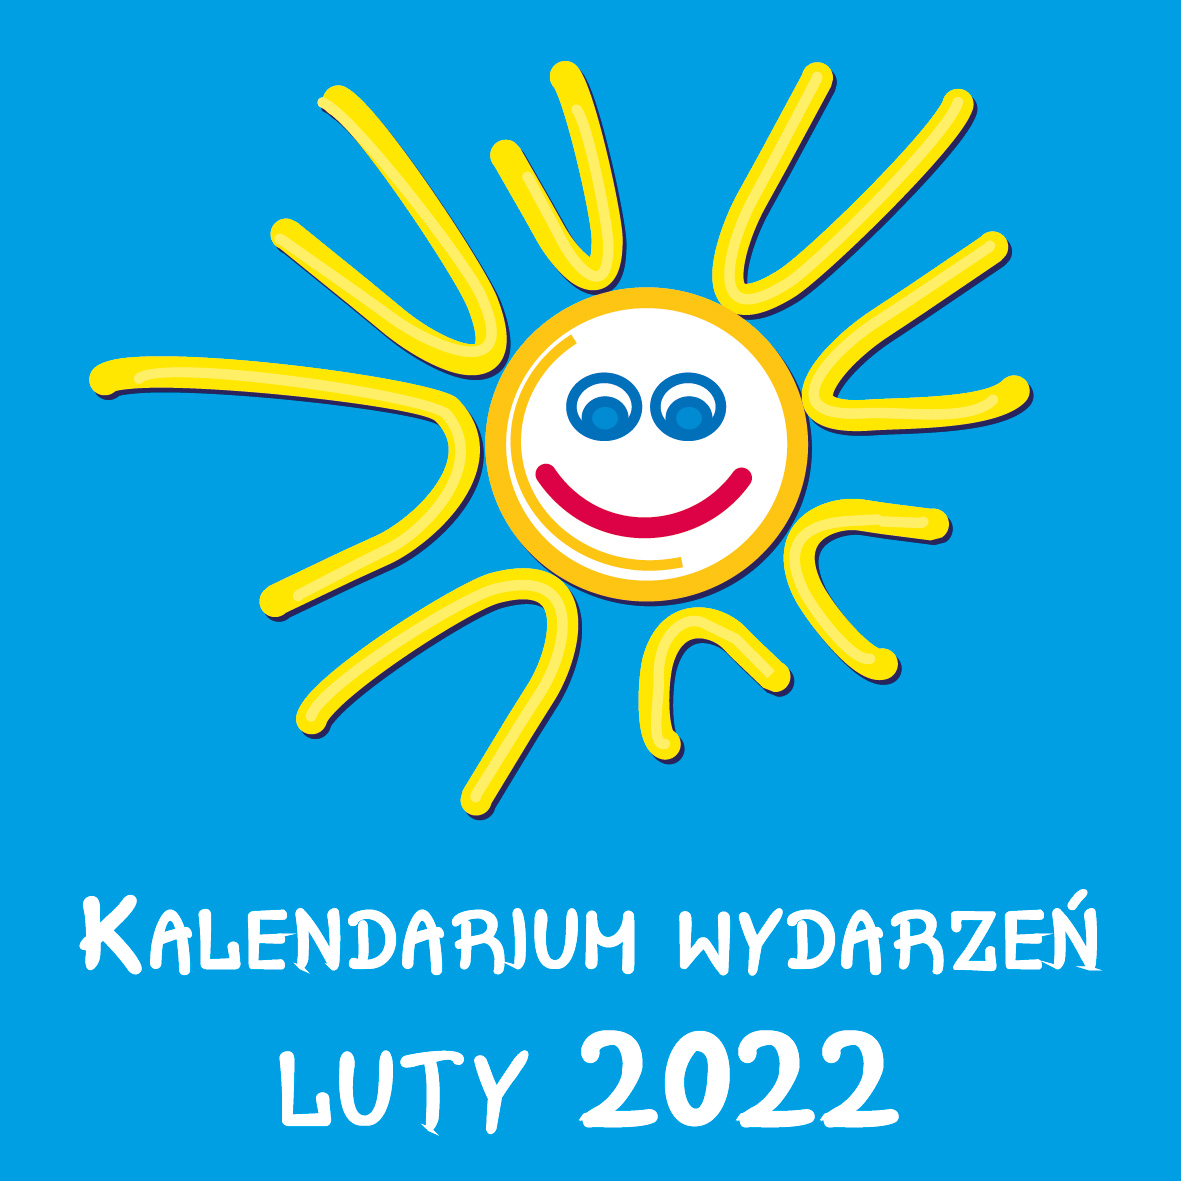 Słonko i napis Kalendarium wydarzeń luty 2022